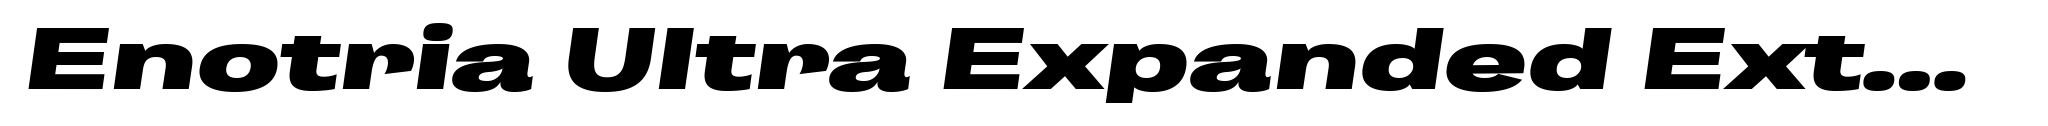 Enotria Ultra Expanded Extrabold Italic image